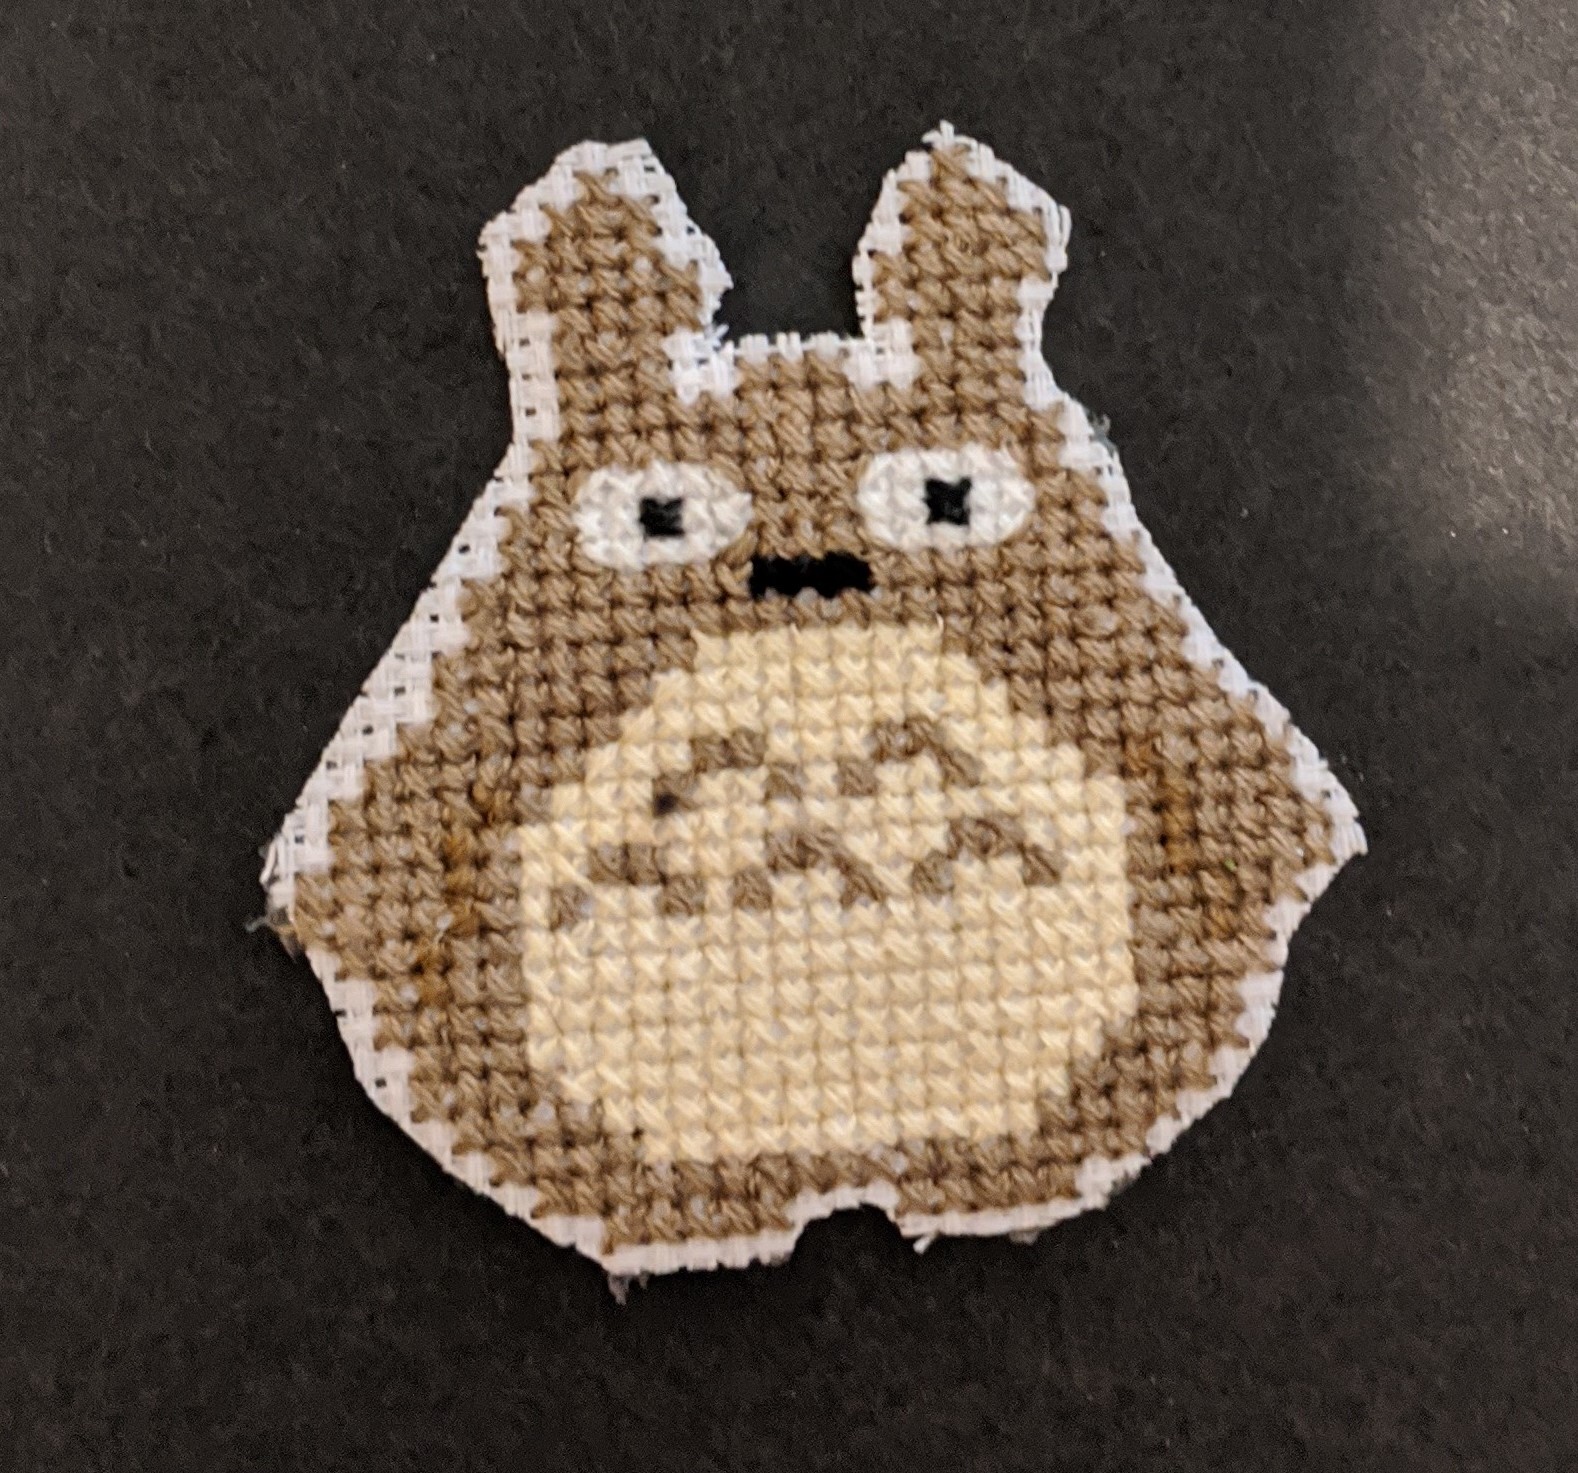 cross stitch of totoro from My Neighbor Totoro